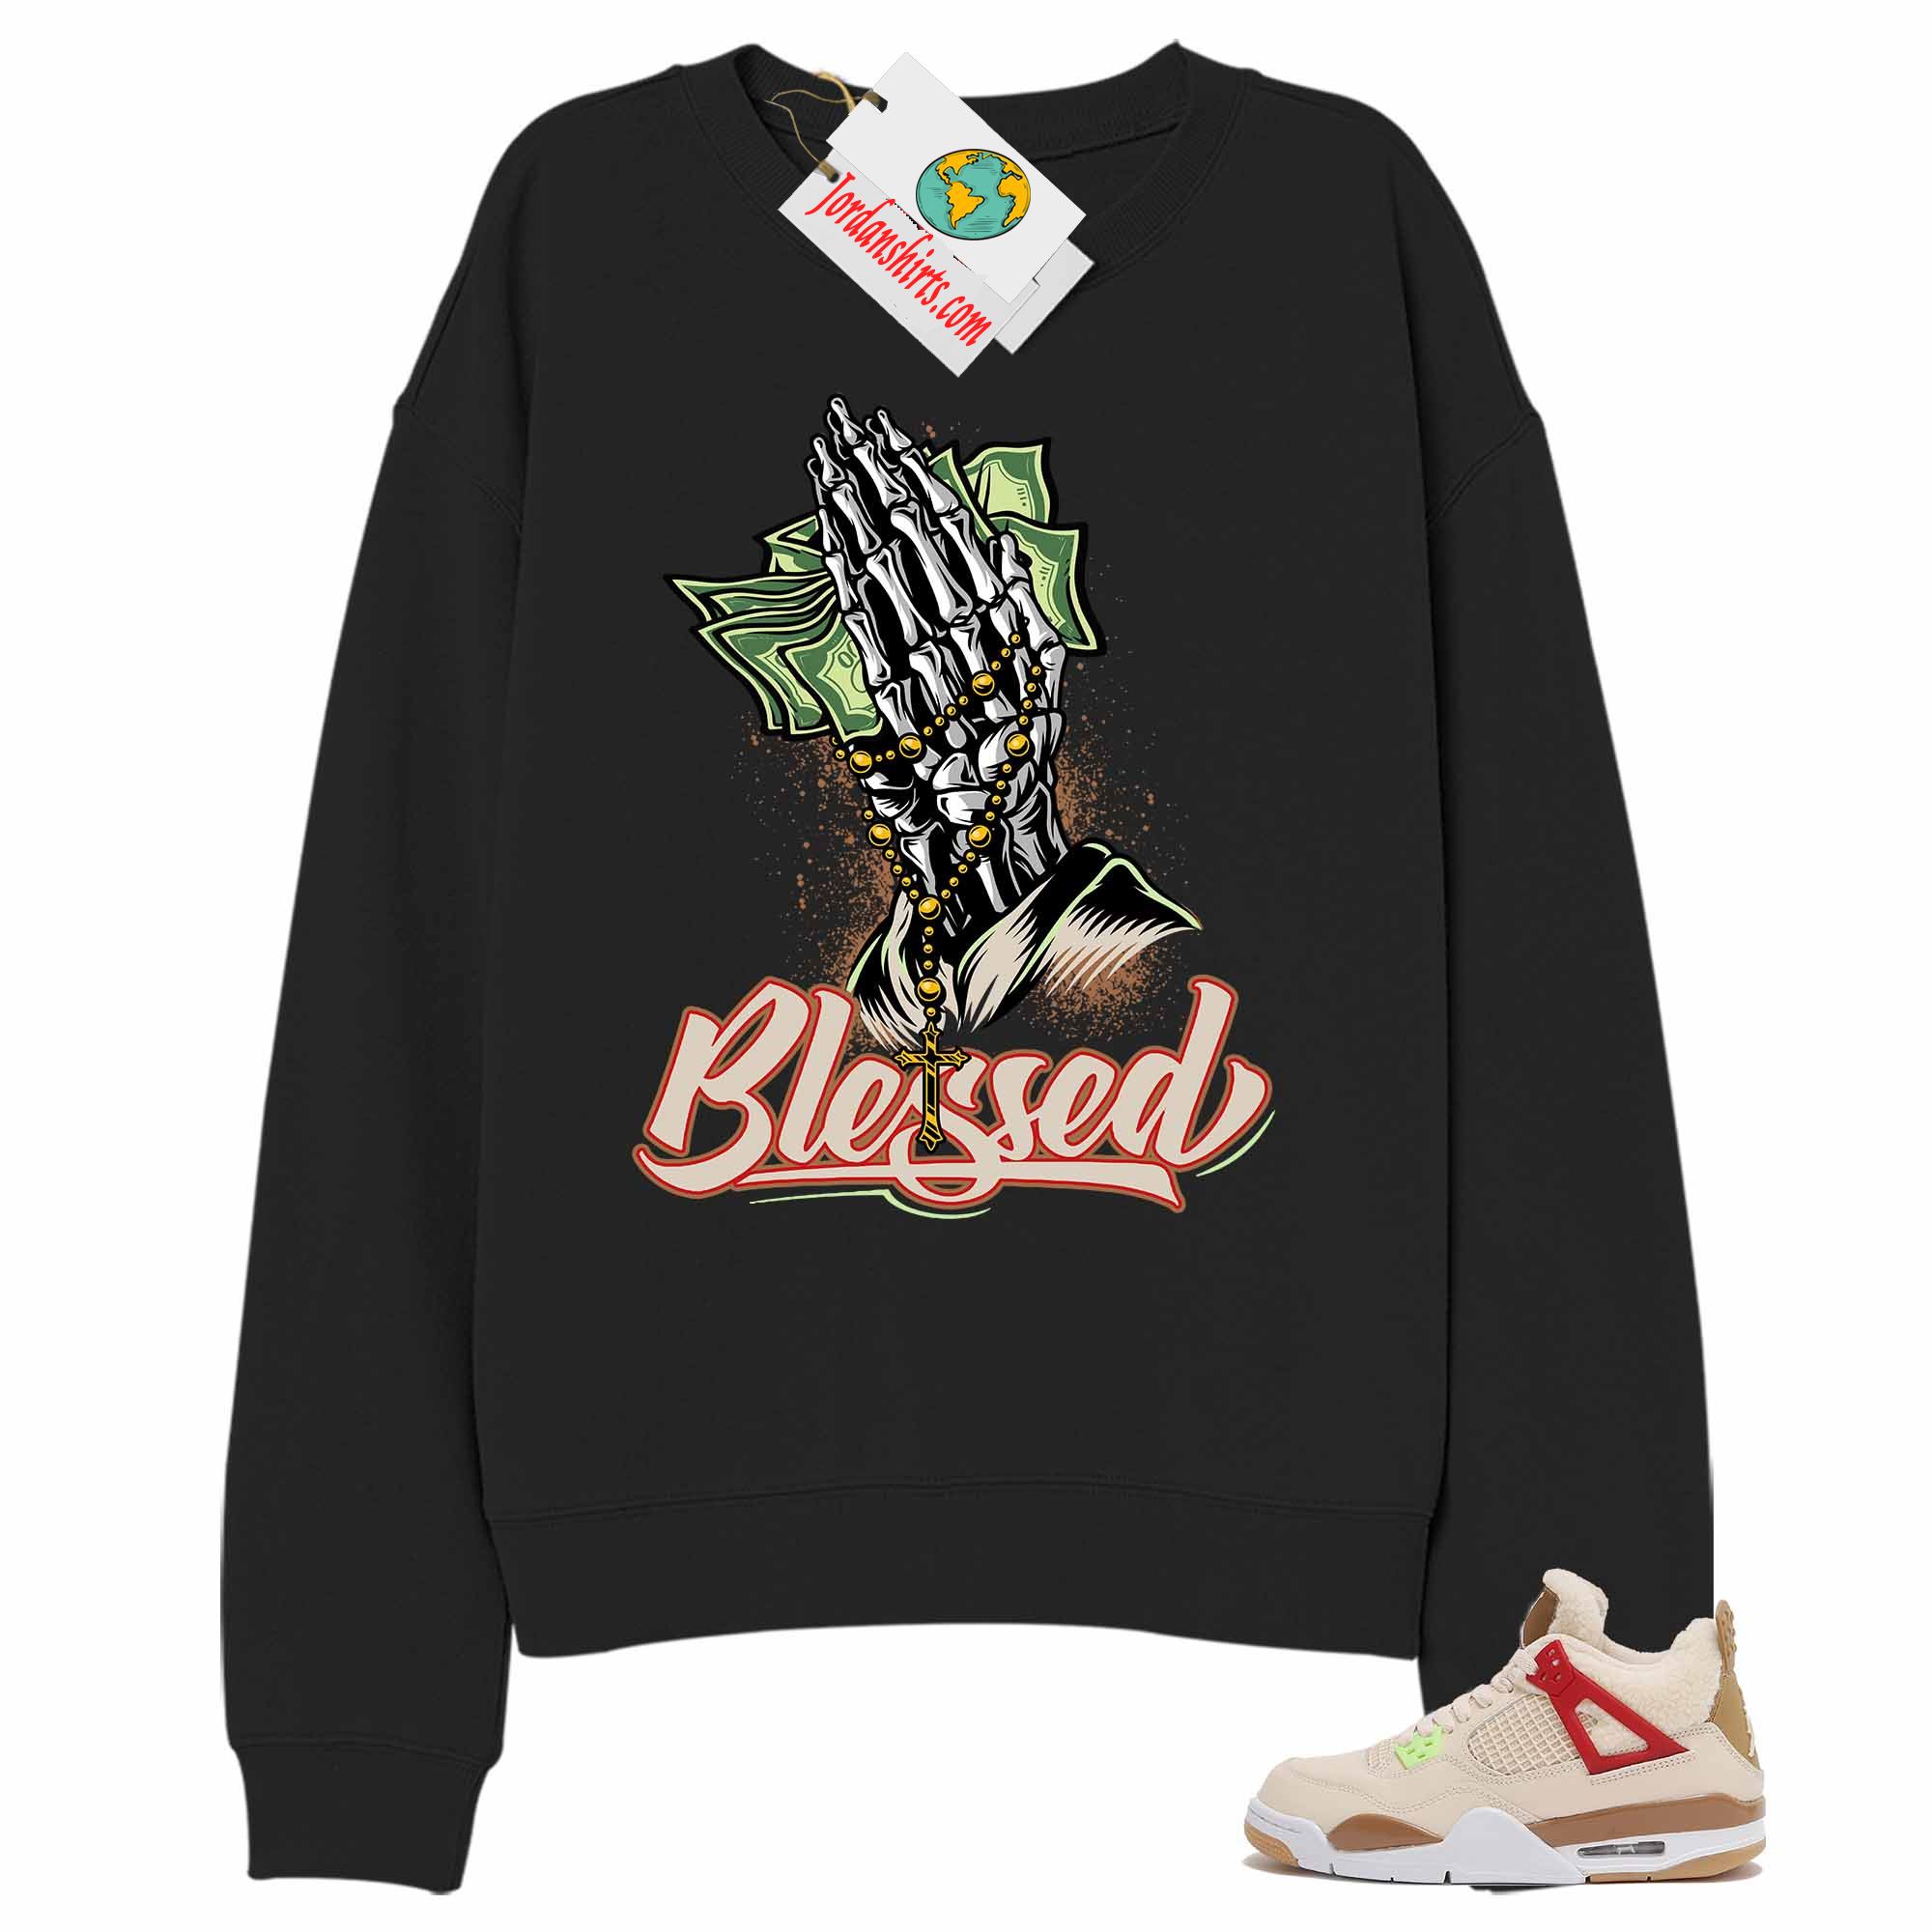 Jordan 4 Sweatshirt, Blessed Pray Hand Money Black Sweatshirt Air Jordan 4 Wild Things 4s Size Up To 5xl